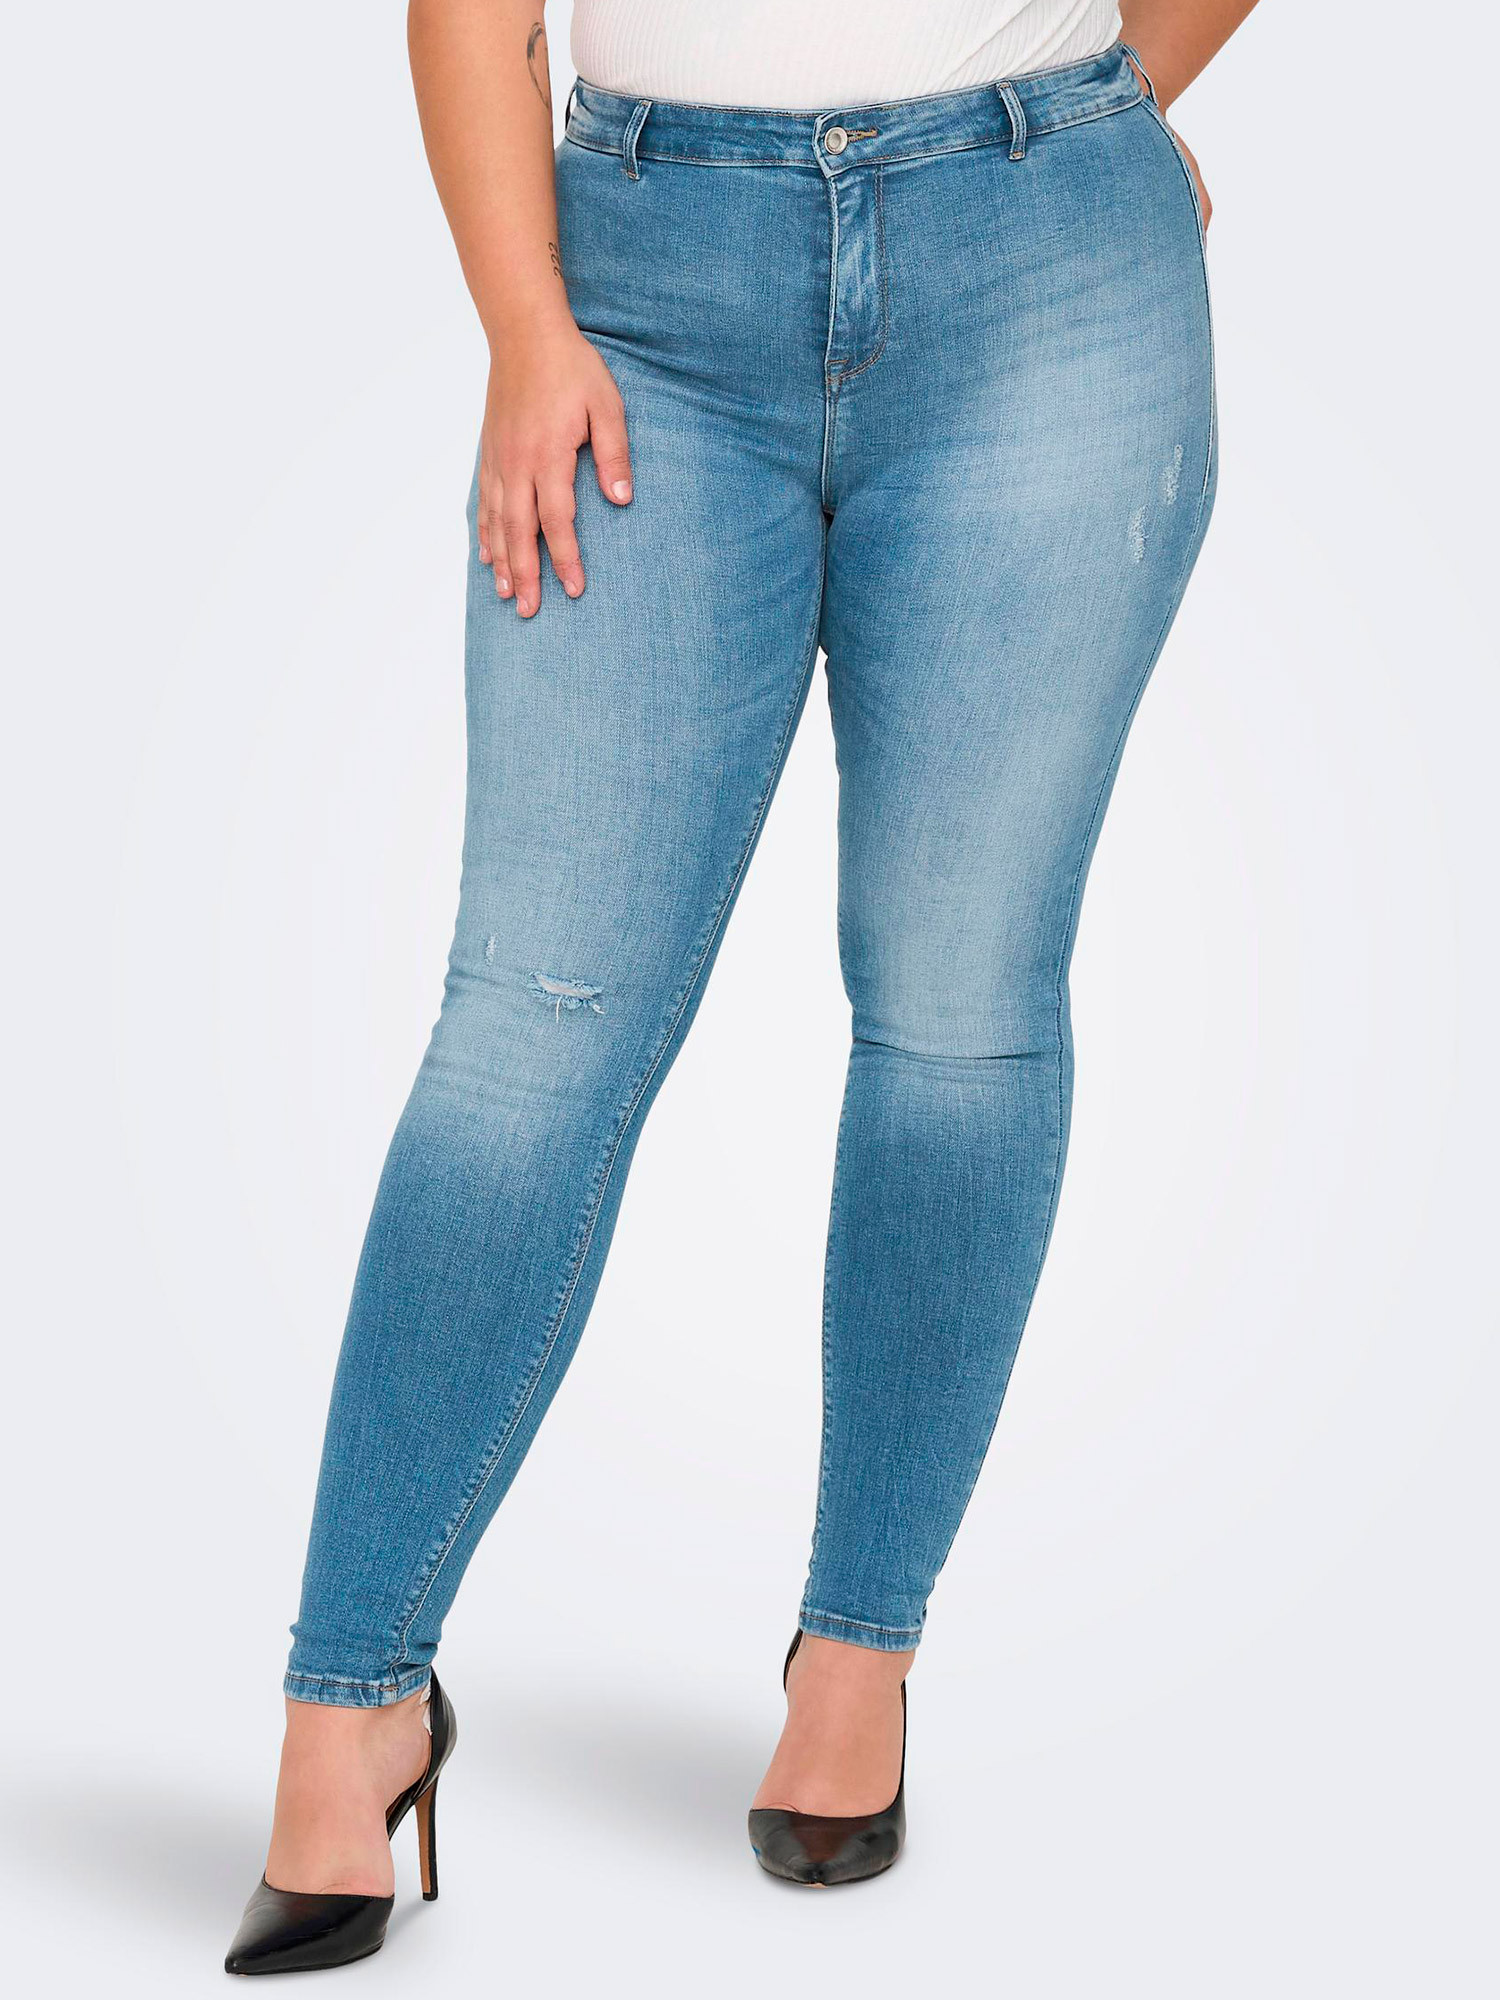 AUGUSTA - Ljusblå jeans i stretchig bomullsdenim